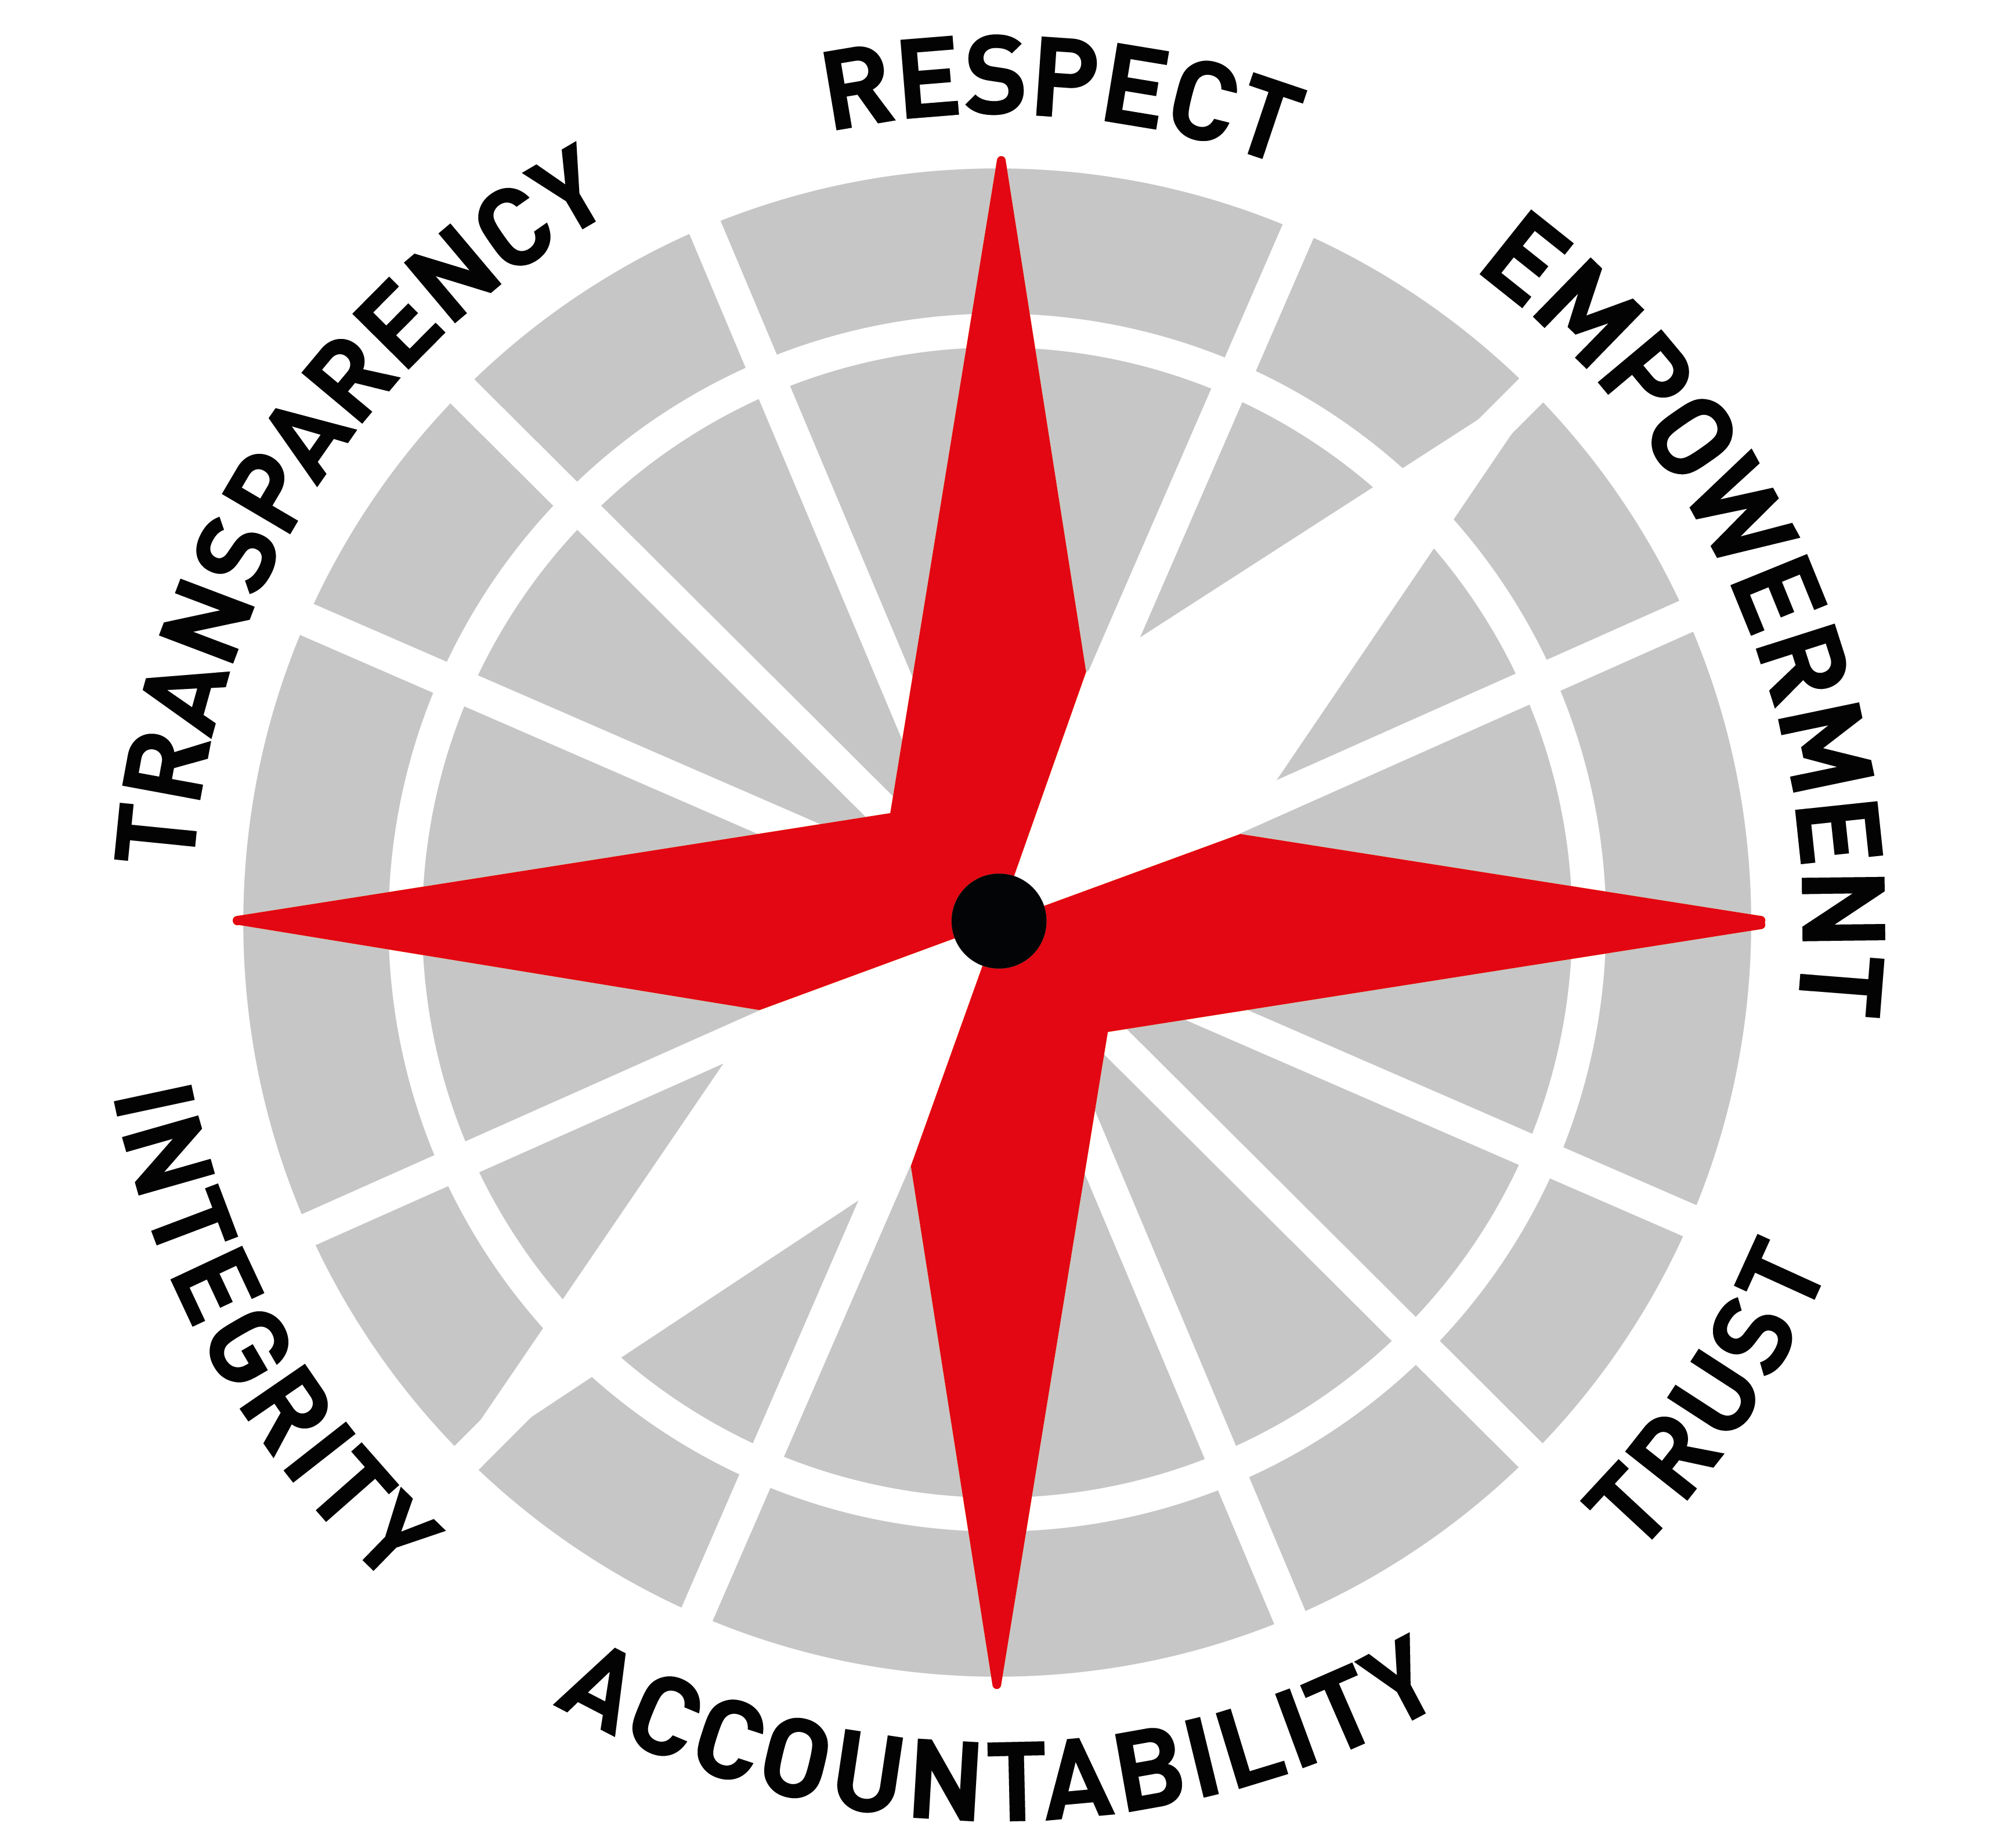 MSF Values